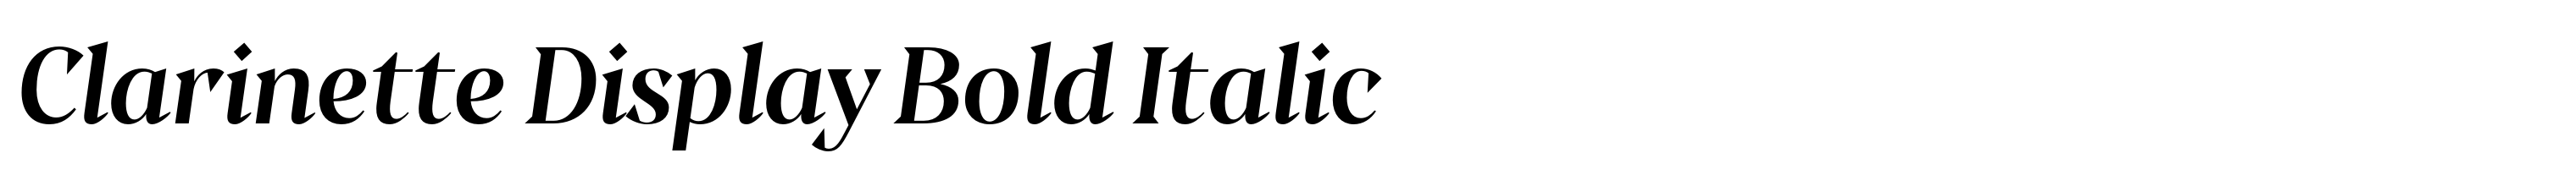 Clarinette Display Bold Italic